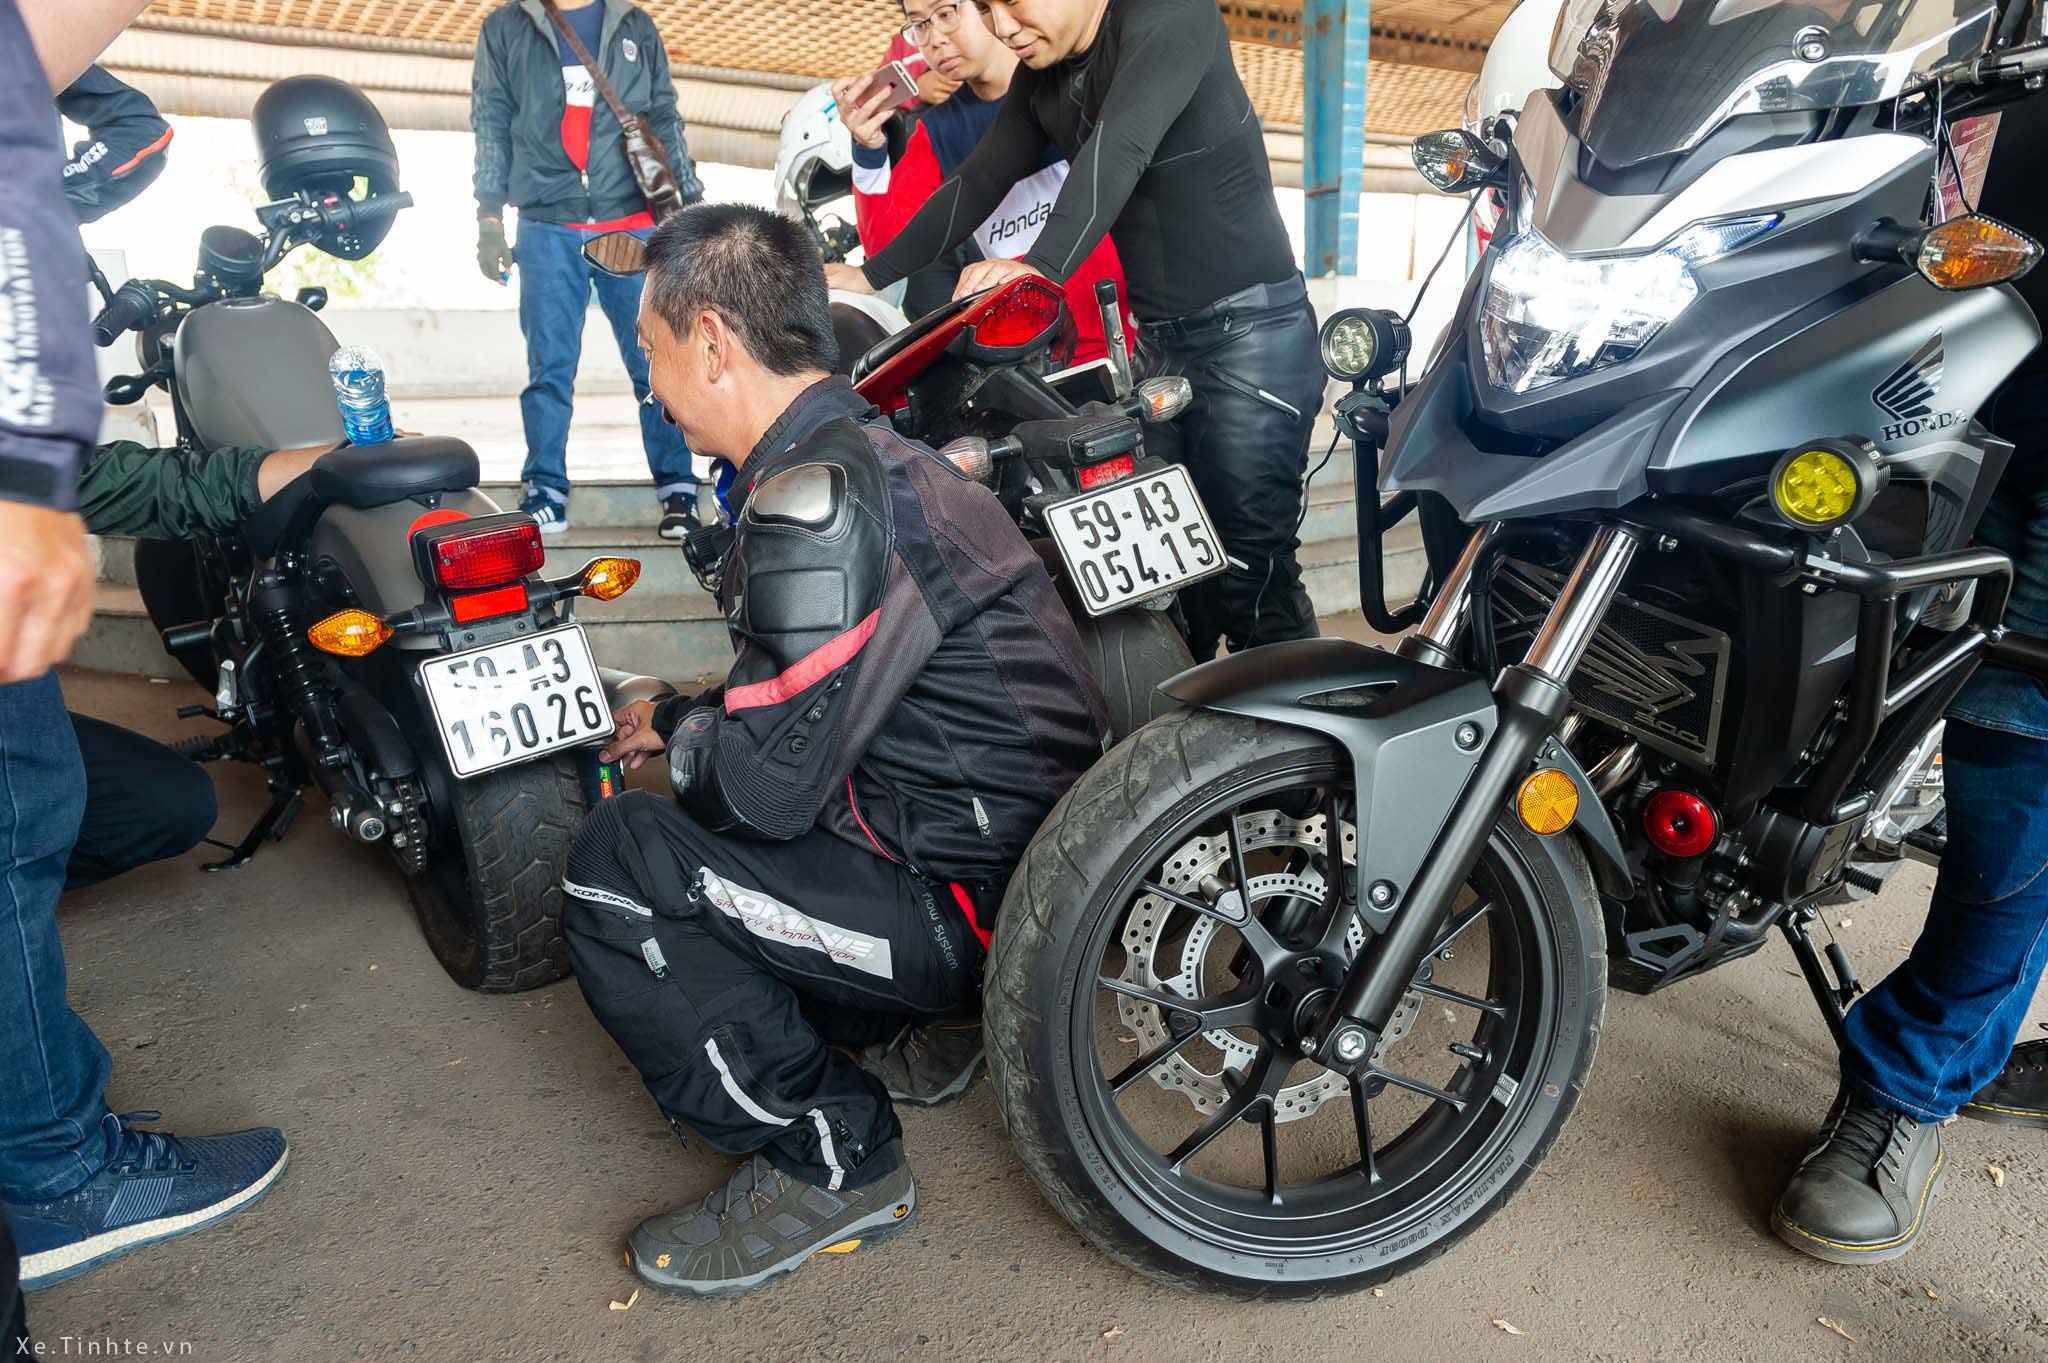 Honda_biker_day_2019_Saigon_Phanthiet (50).jpg